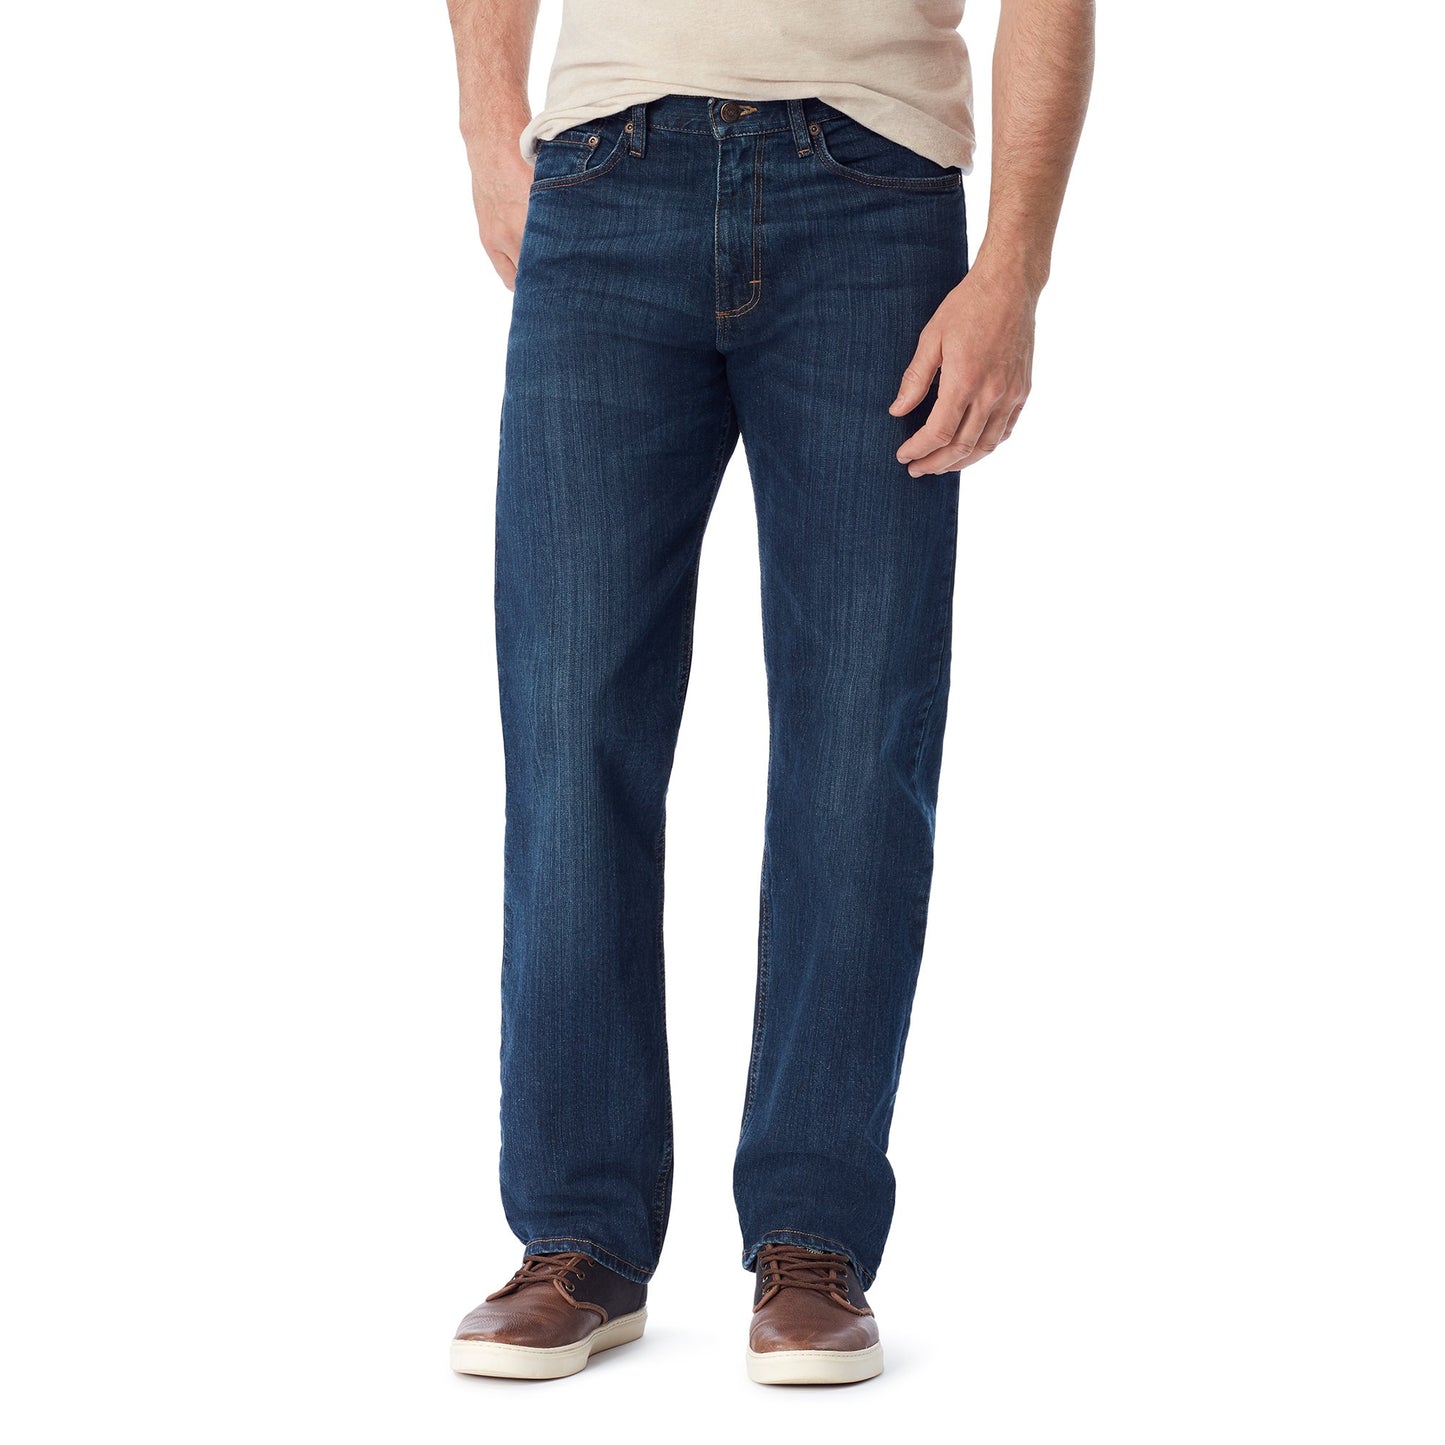 Wrangler Authentics Men's Classic 5-Pocket Relaxed Fit Jean, Flex Dark, 40W x 30L